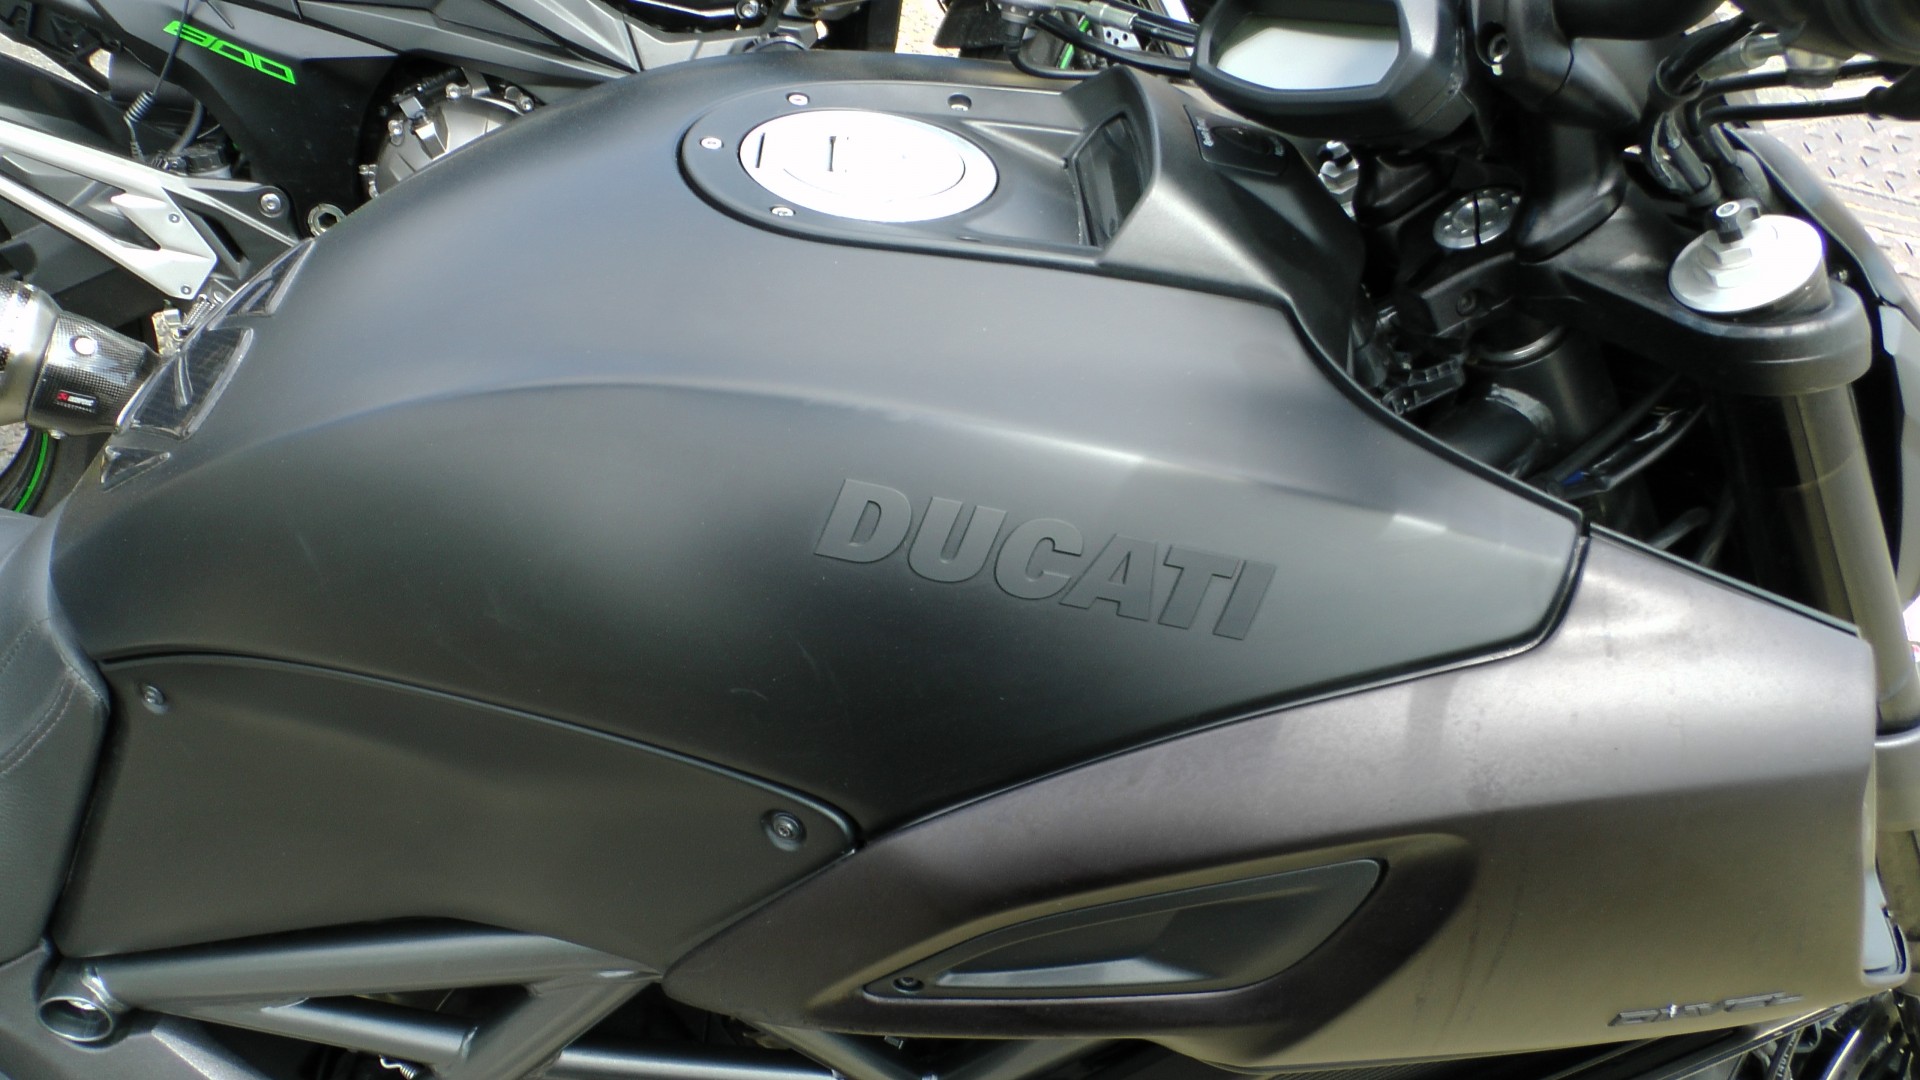 Ducati Motorcycle Gas Tank